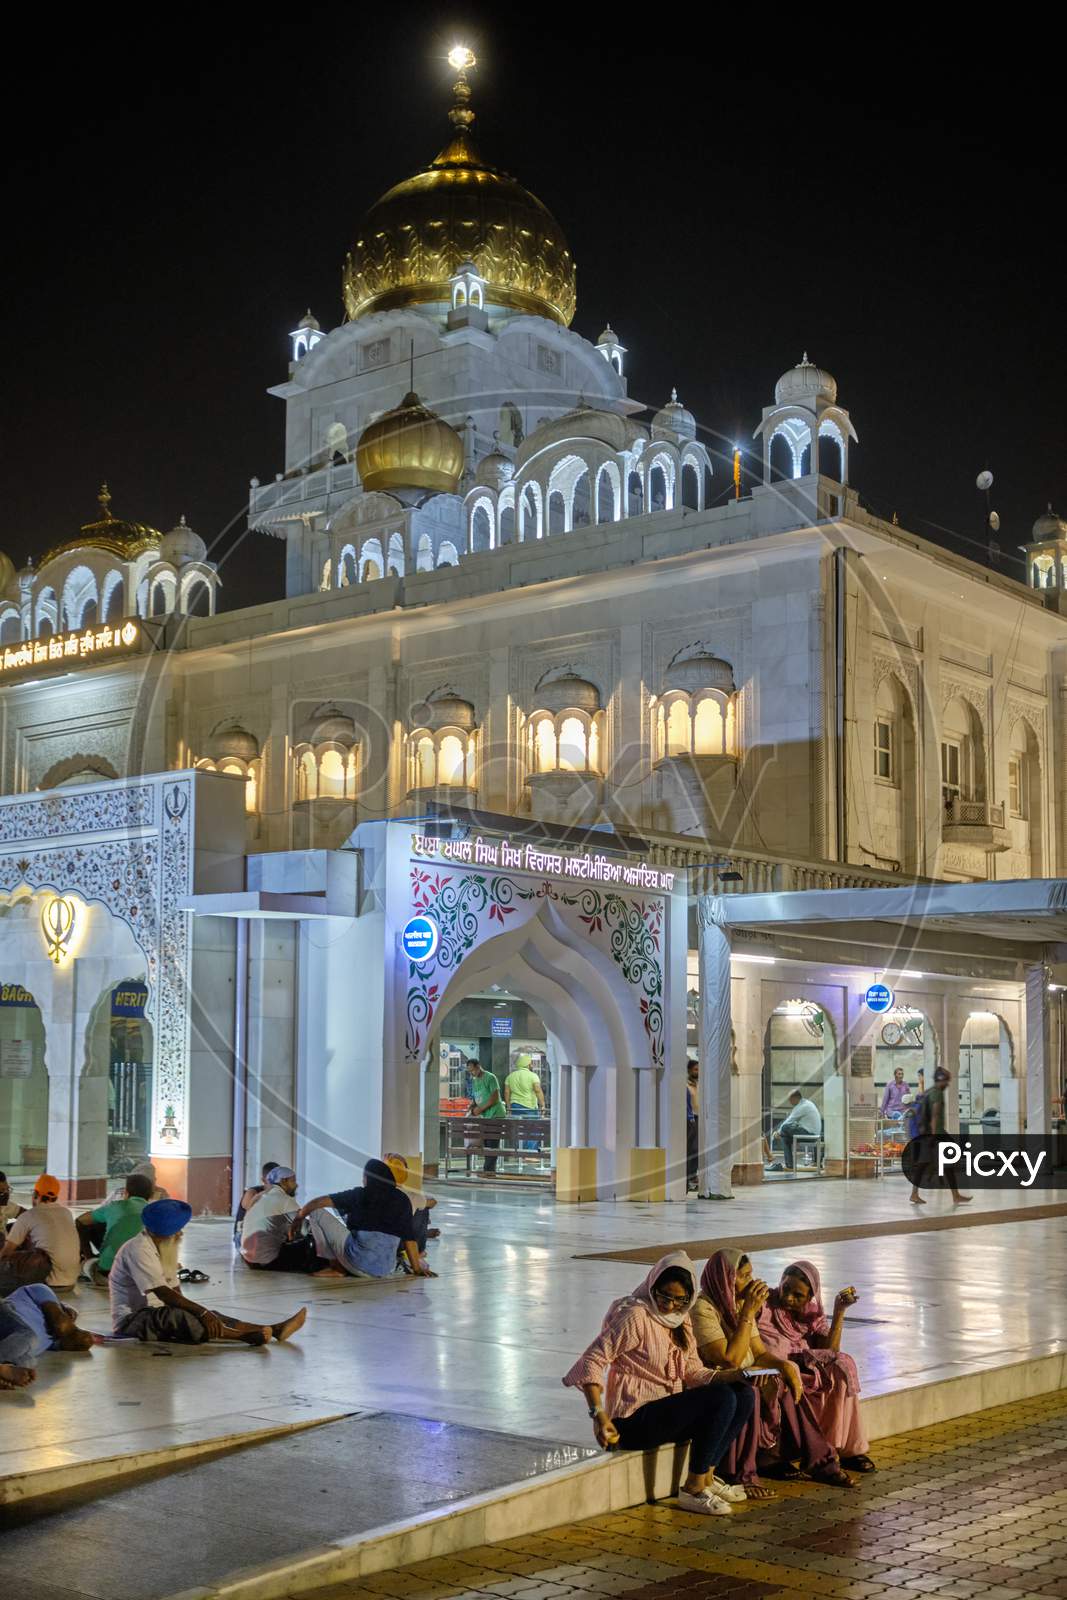 Night View Of Sri Bangla Sahib Gurudwara Sikh Temple In New Delhi, India